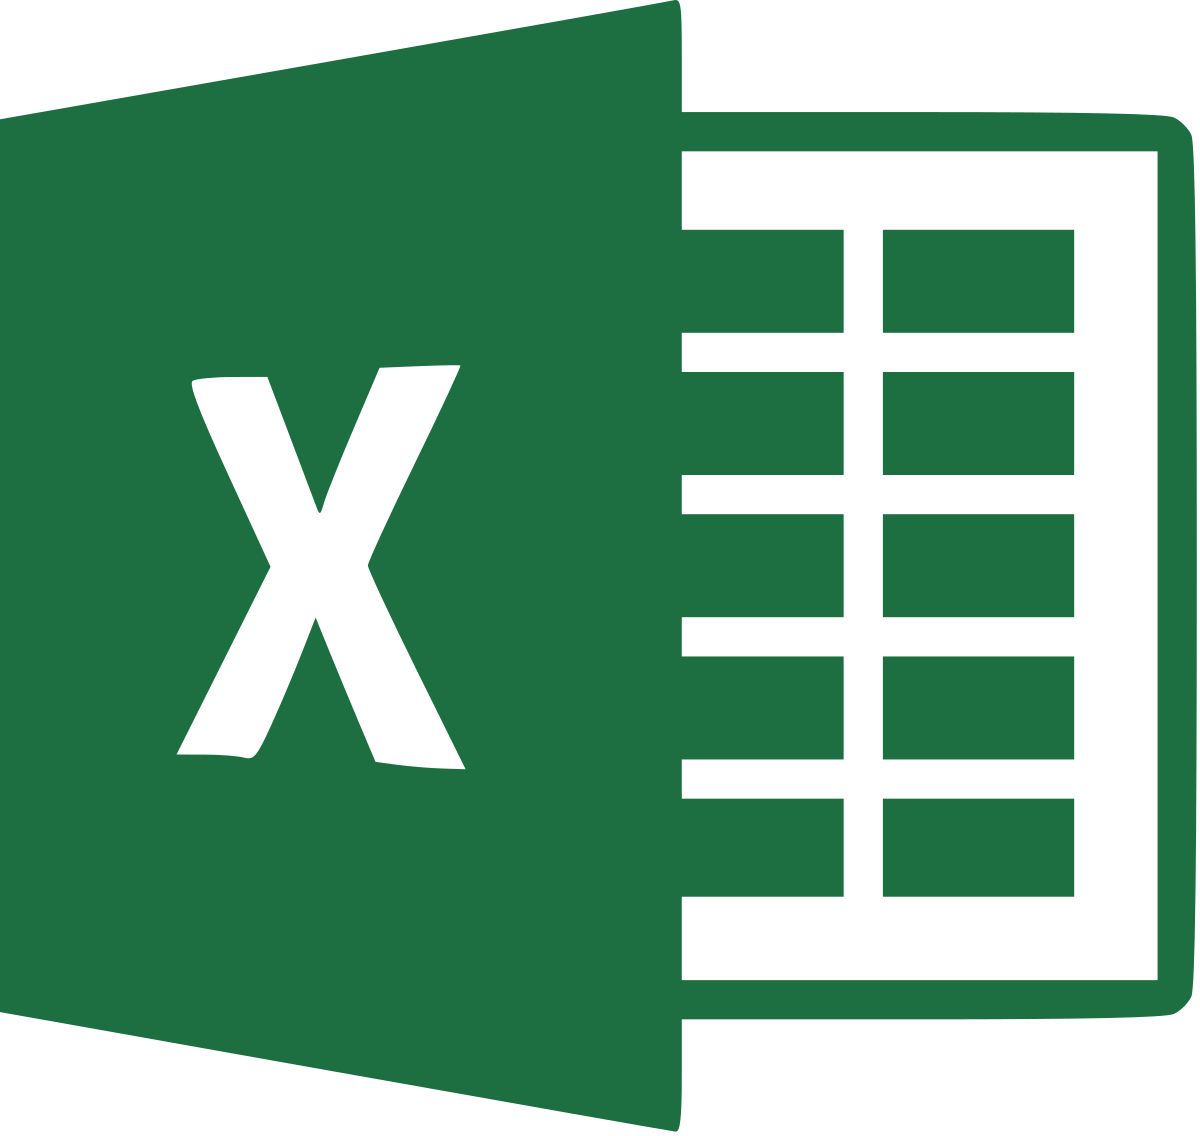 Oldest Microsoft Logo - Microsoft Excel